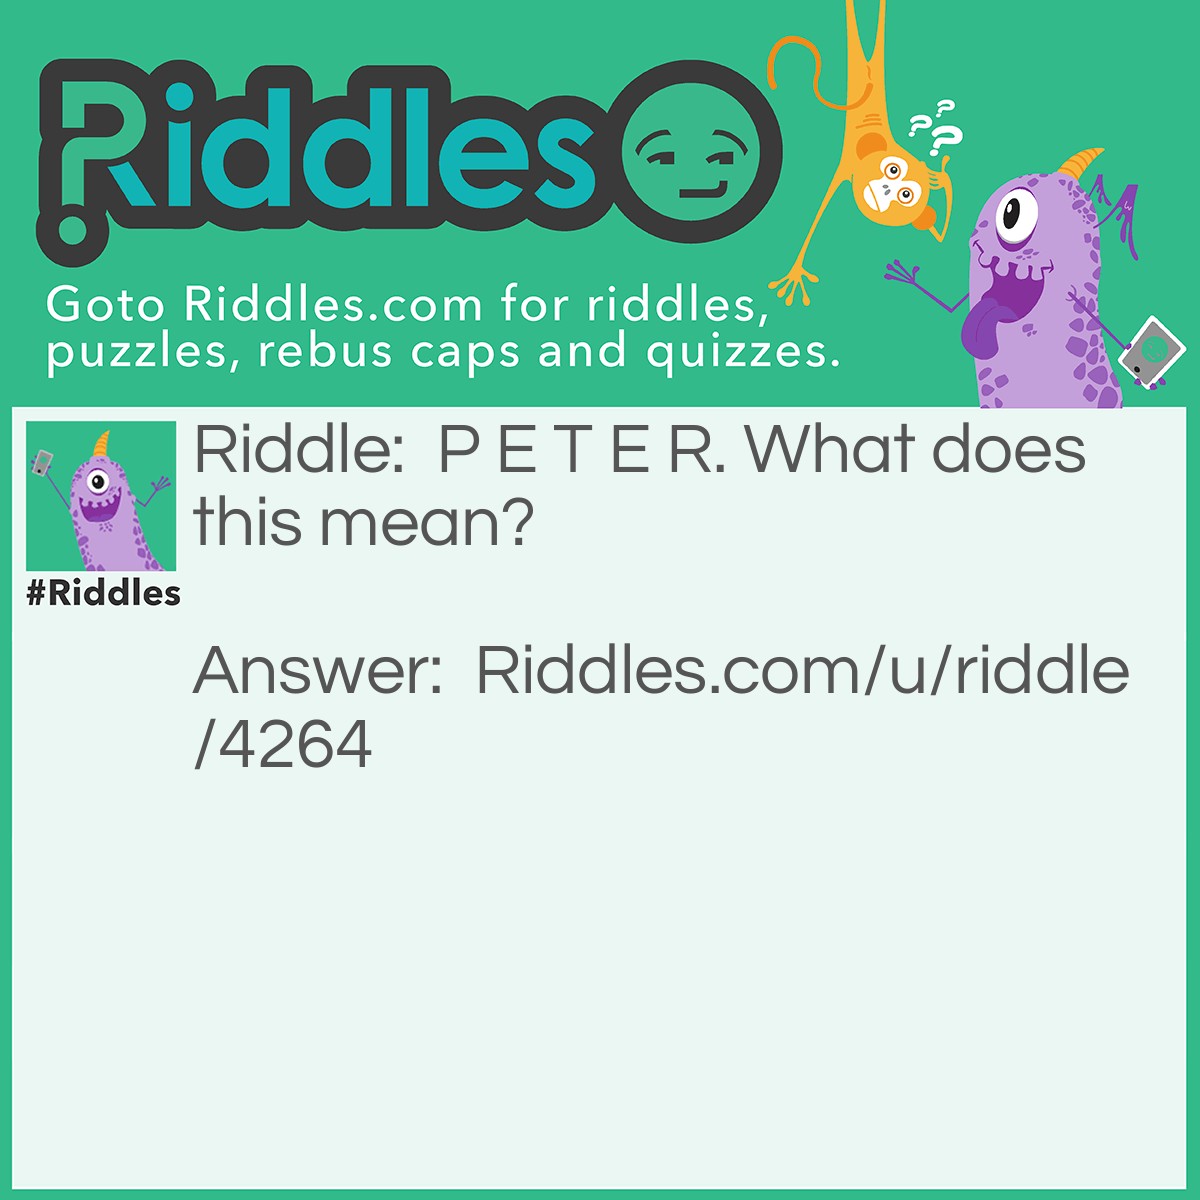 Riddle: P E T E R. What does this mean? Answer: A Pet Helper.